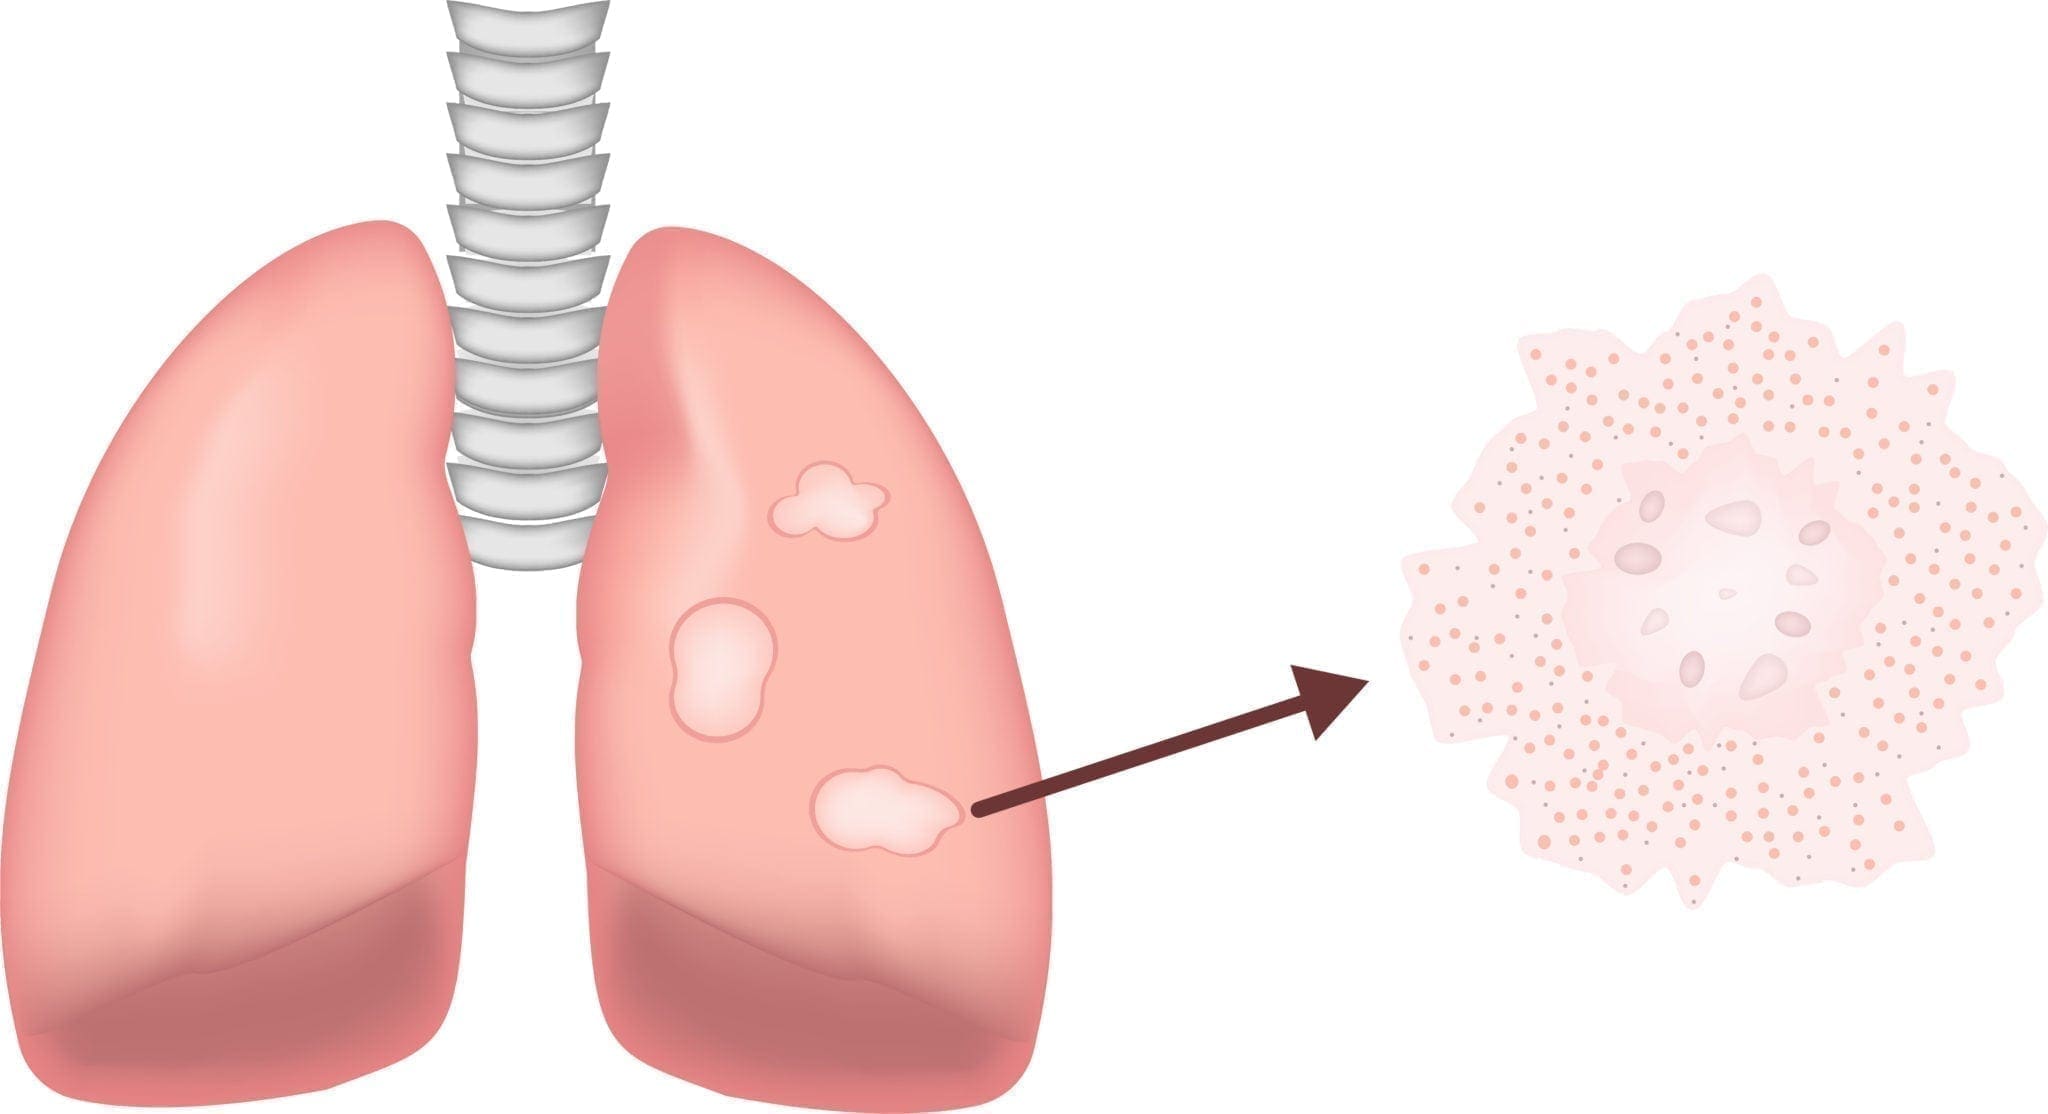 is pleural mesothelioma a lung cancer